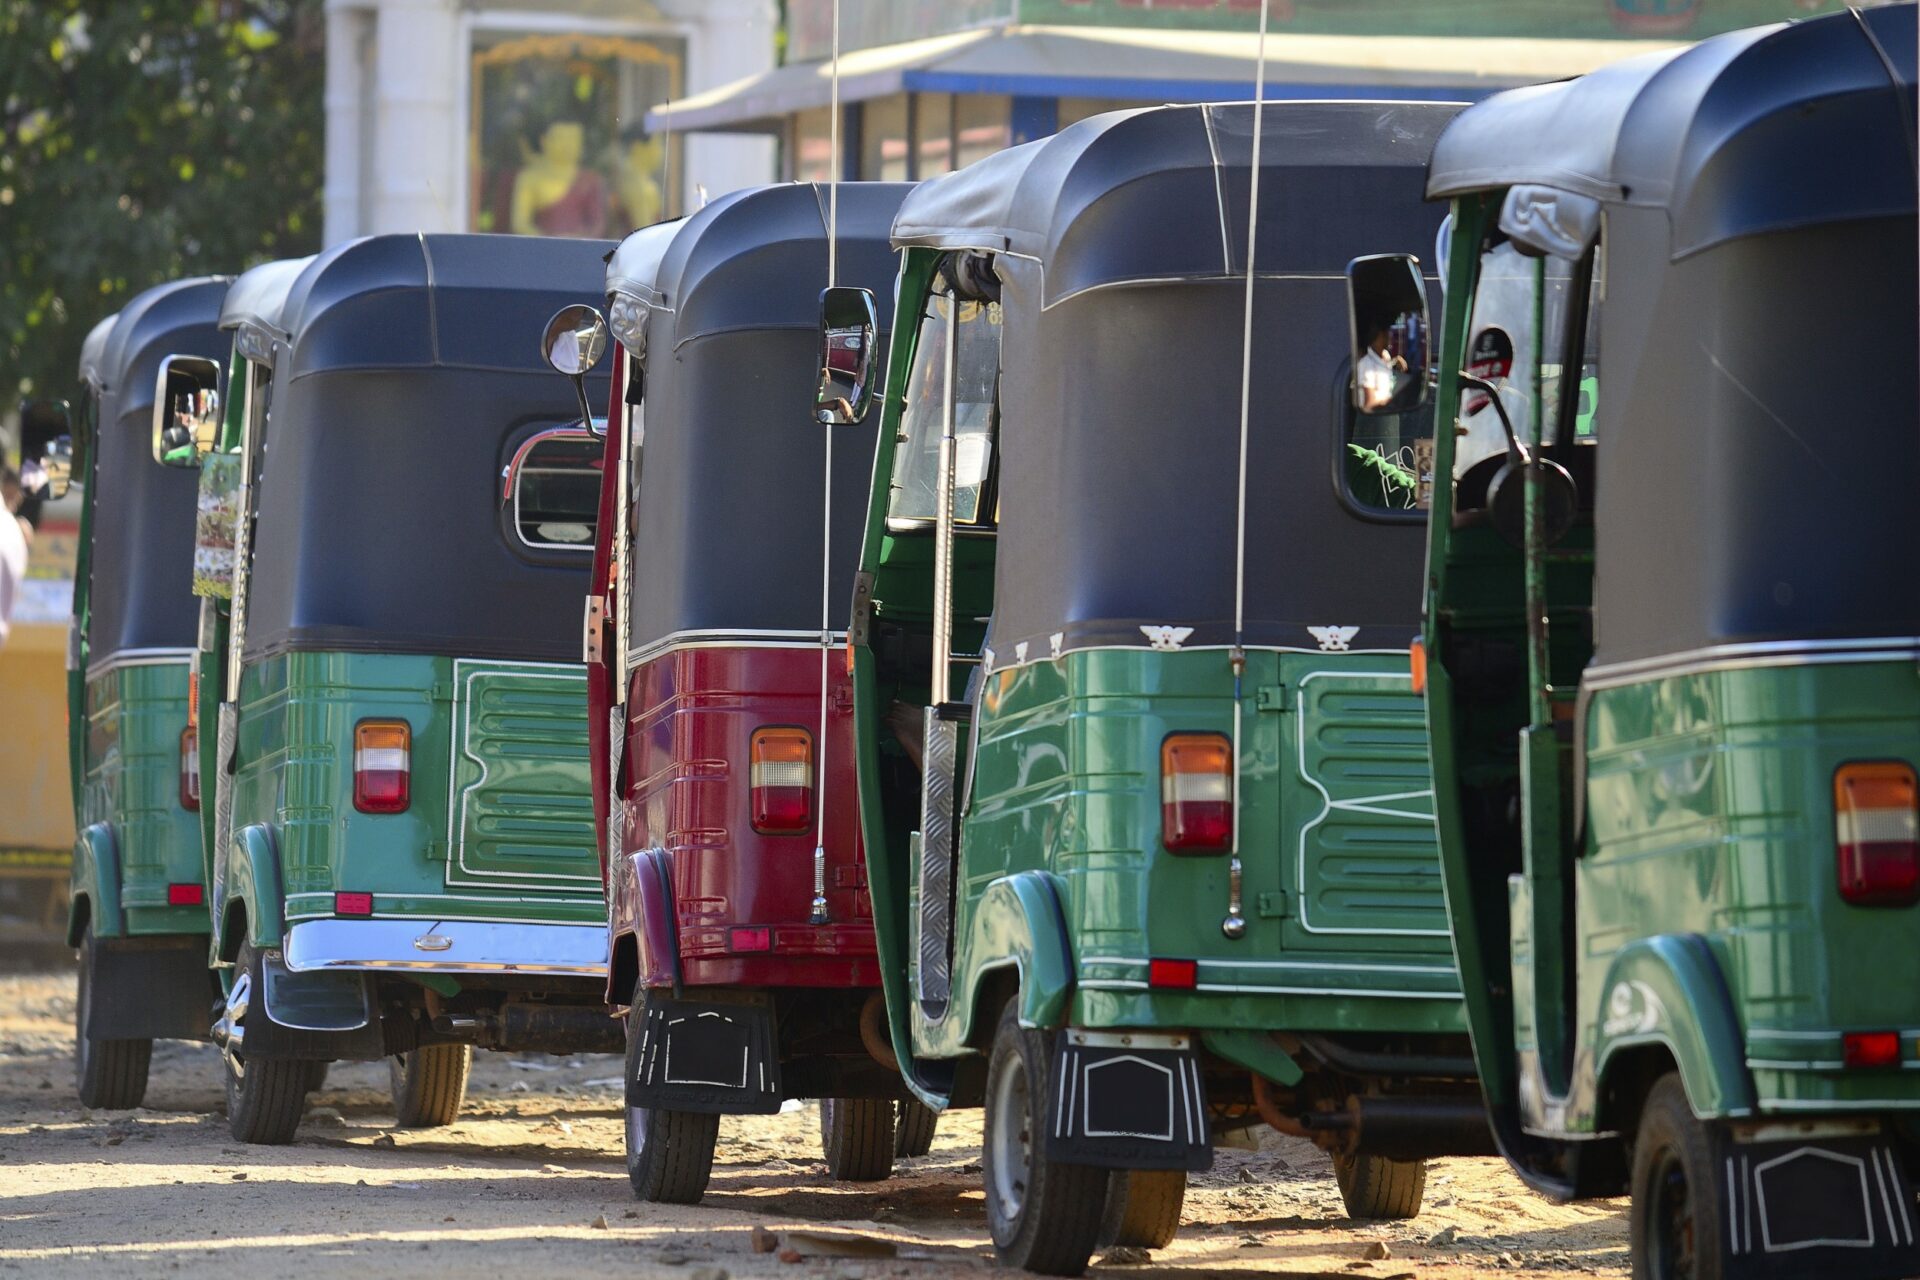 Home Istock Sri Lanka algemeen kandy colombo negombo onderweg tuktuks